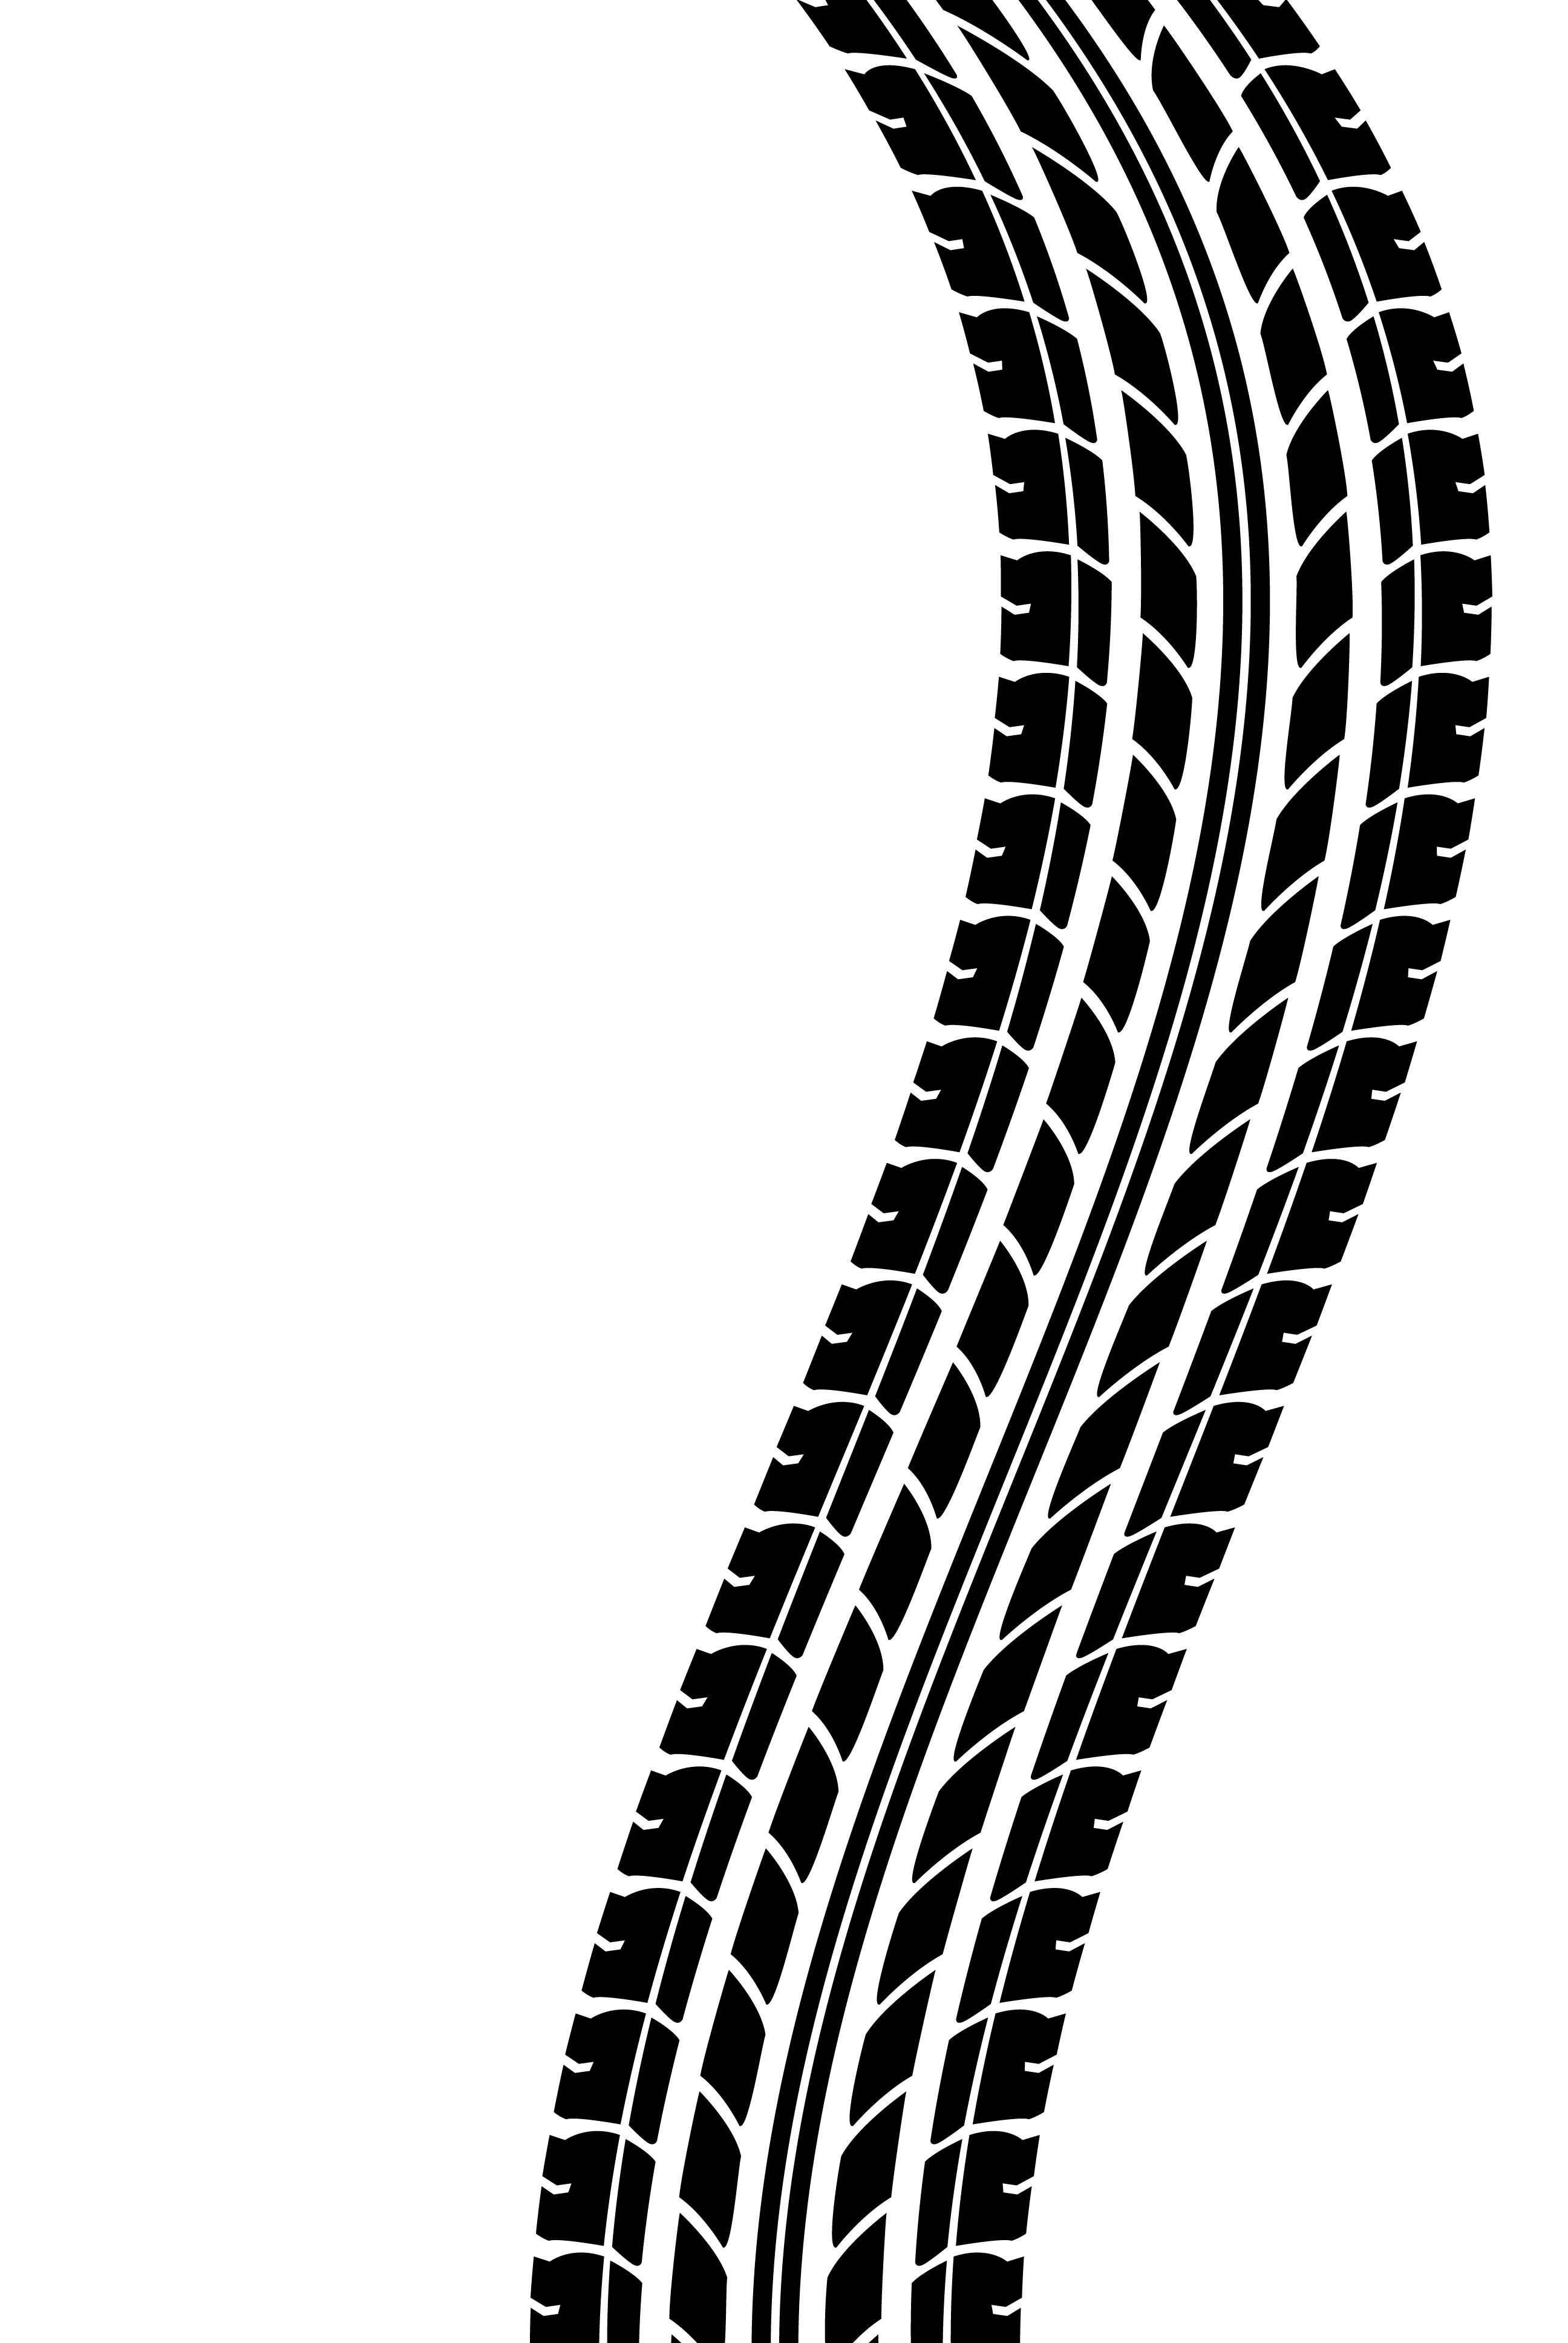 tire tread: tire track backgr